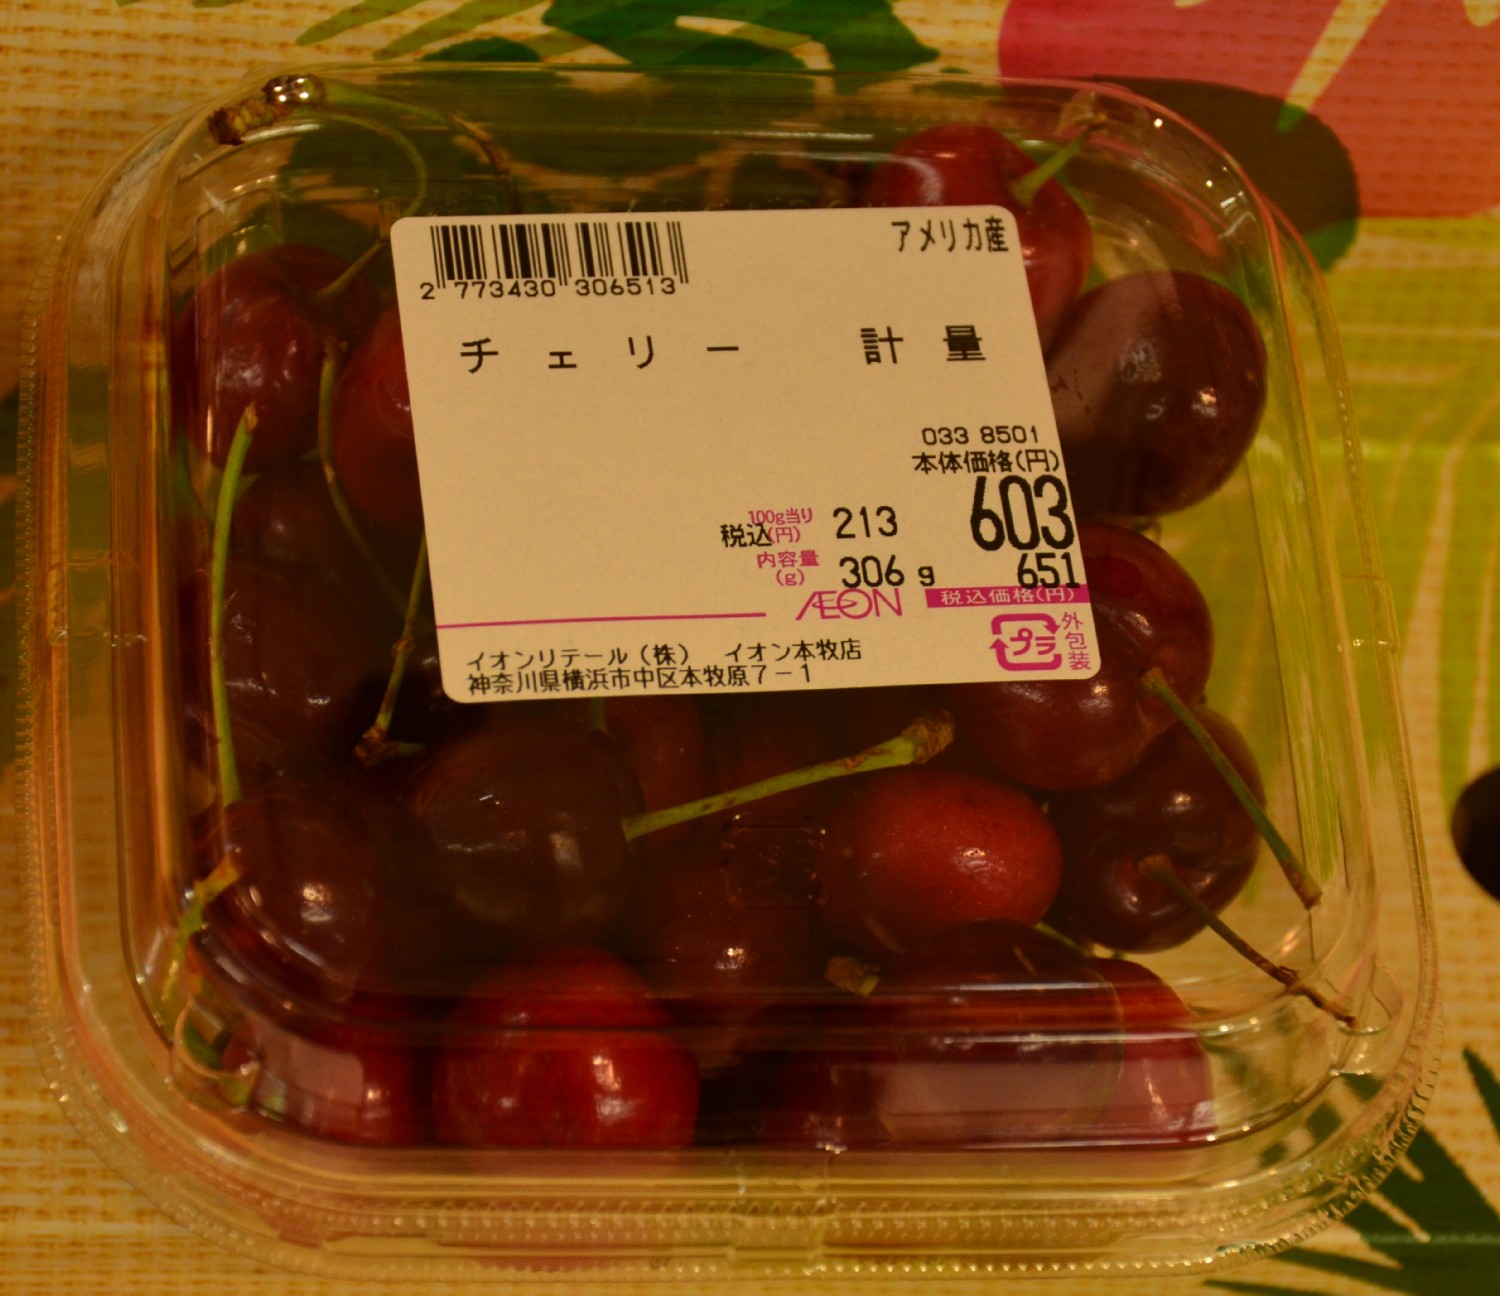 306 g cseresznye 5.2 Euro